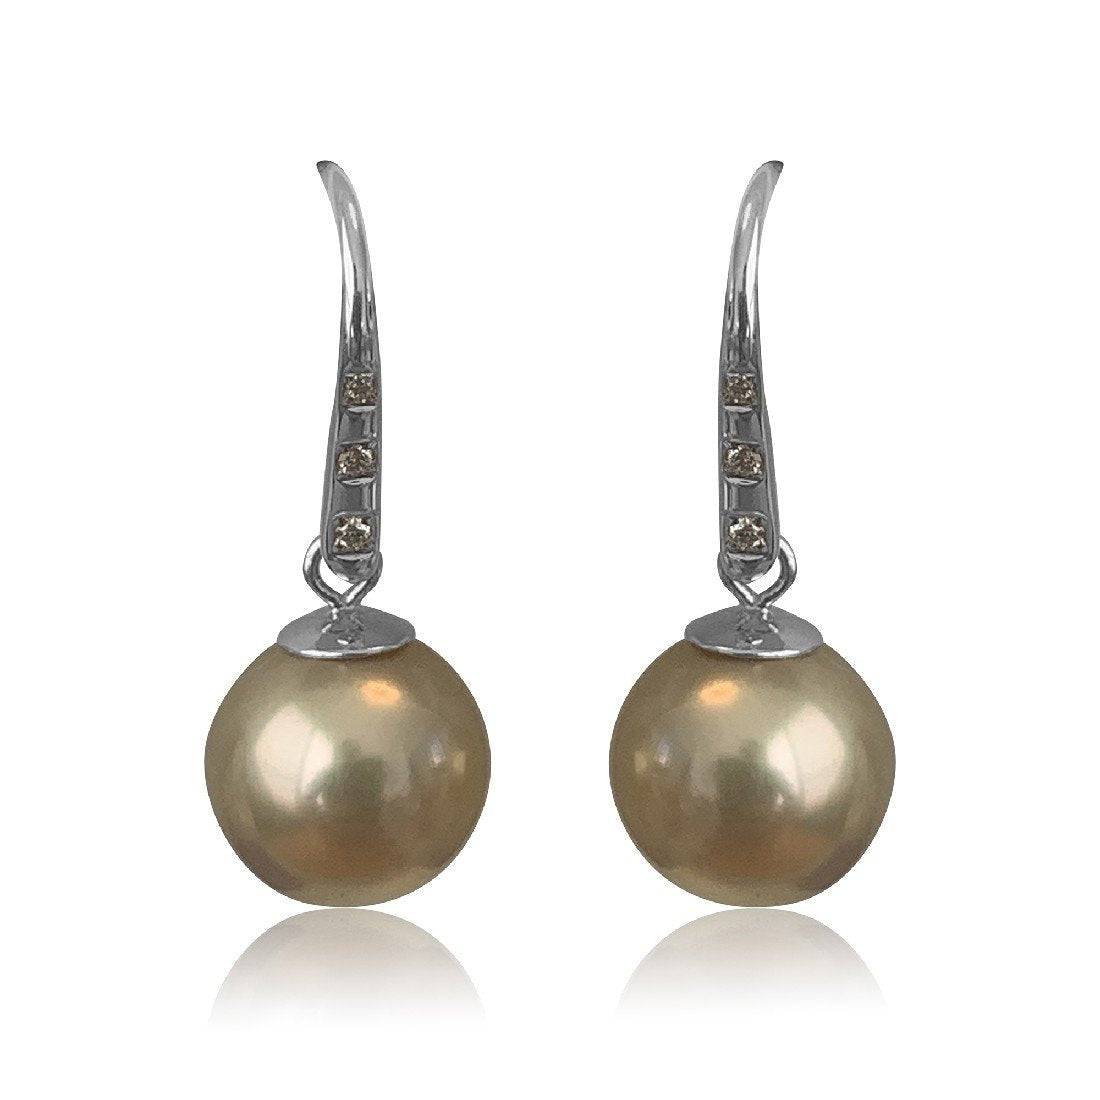 18kt White Gold Golden Pearl and Diamond earrings - Masterpiece Jewellery Opal & Gems Sydney Australia | Online Shop